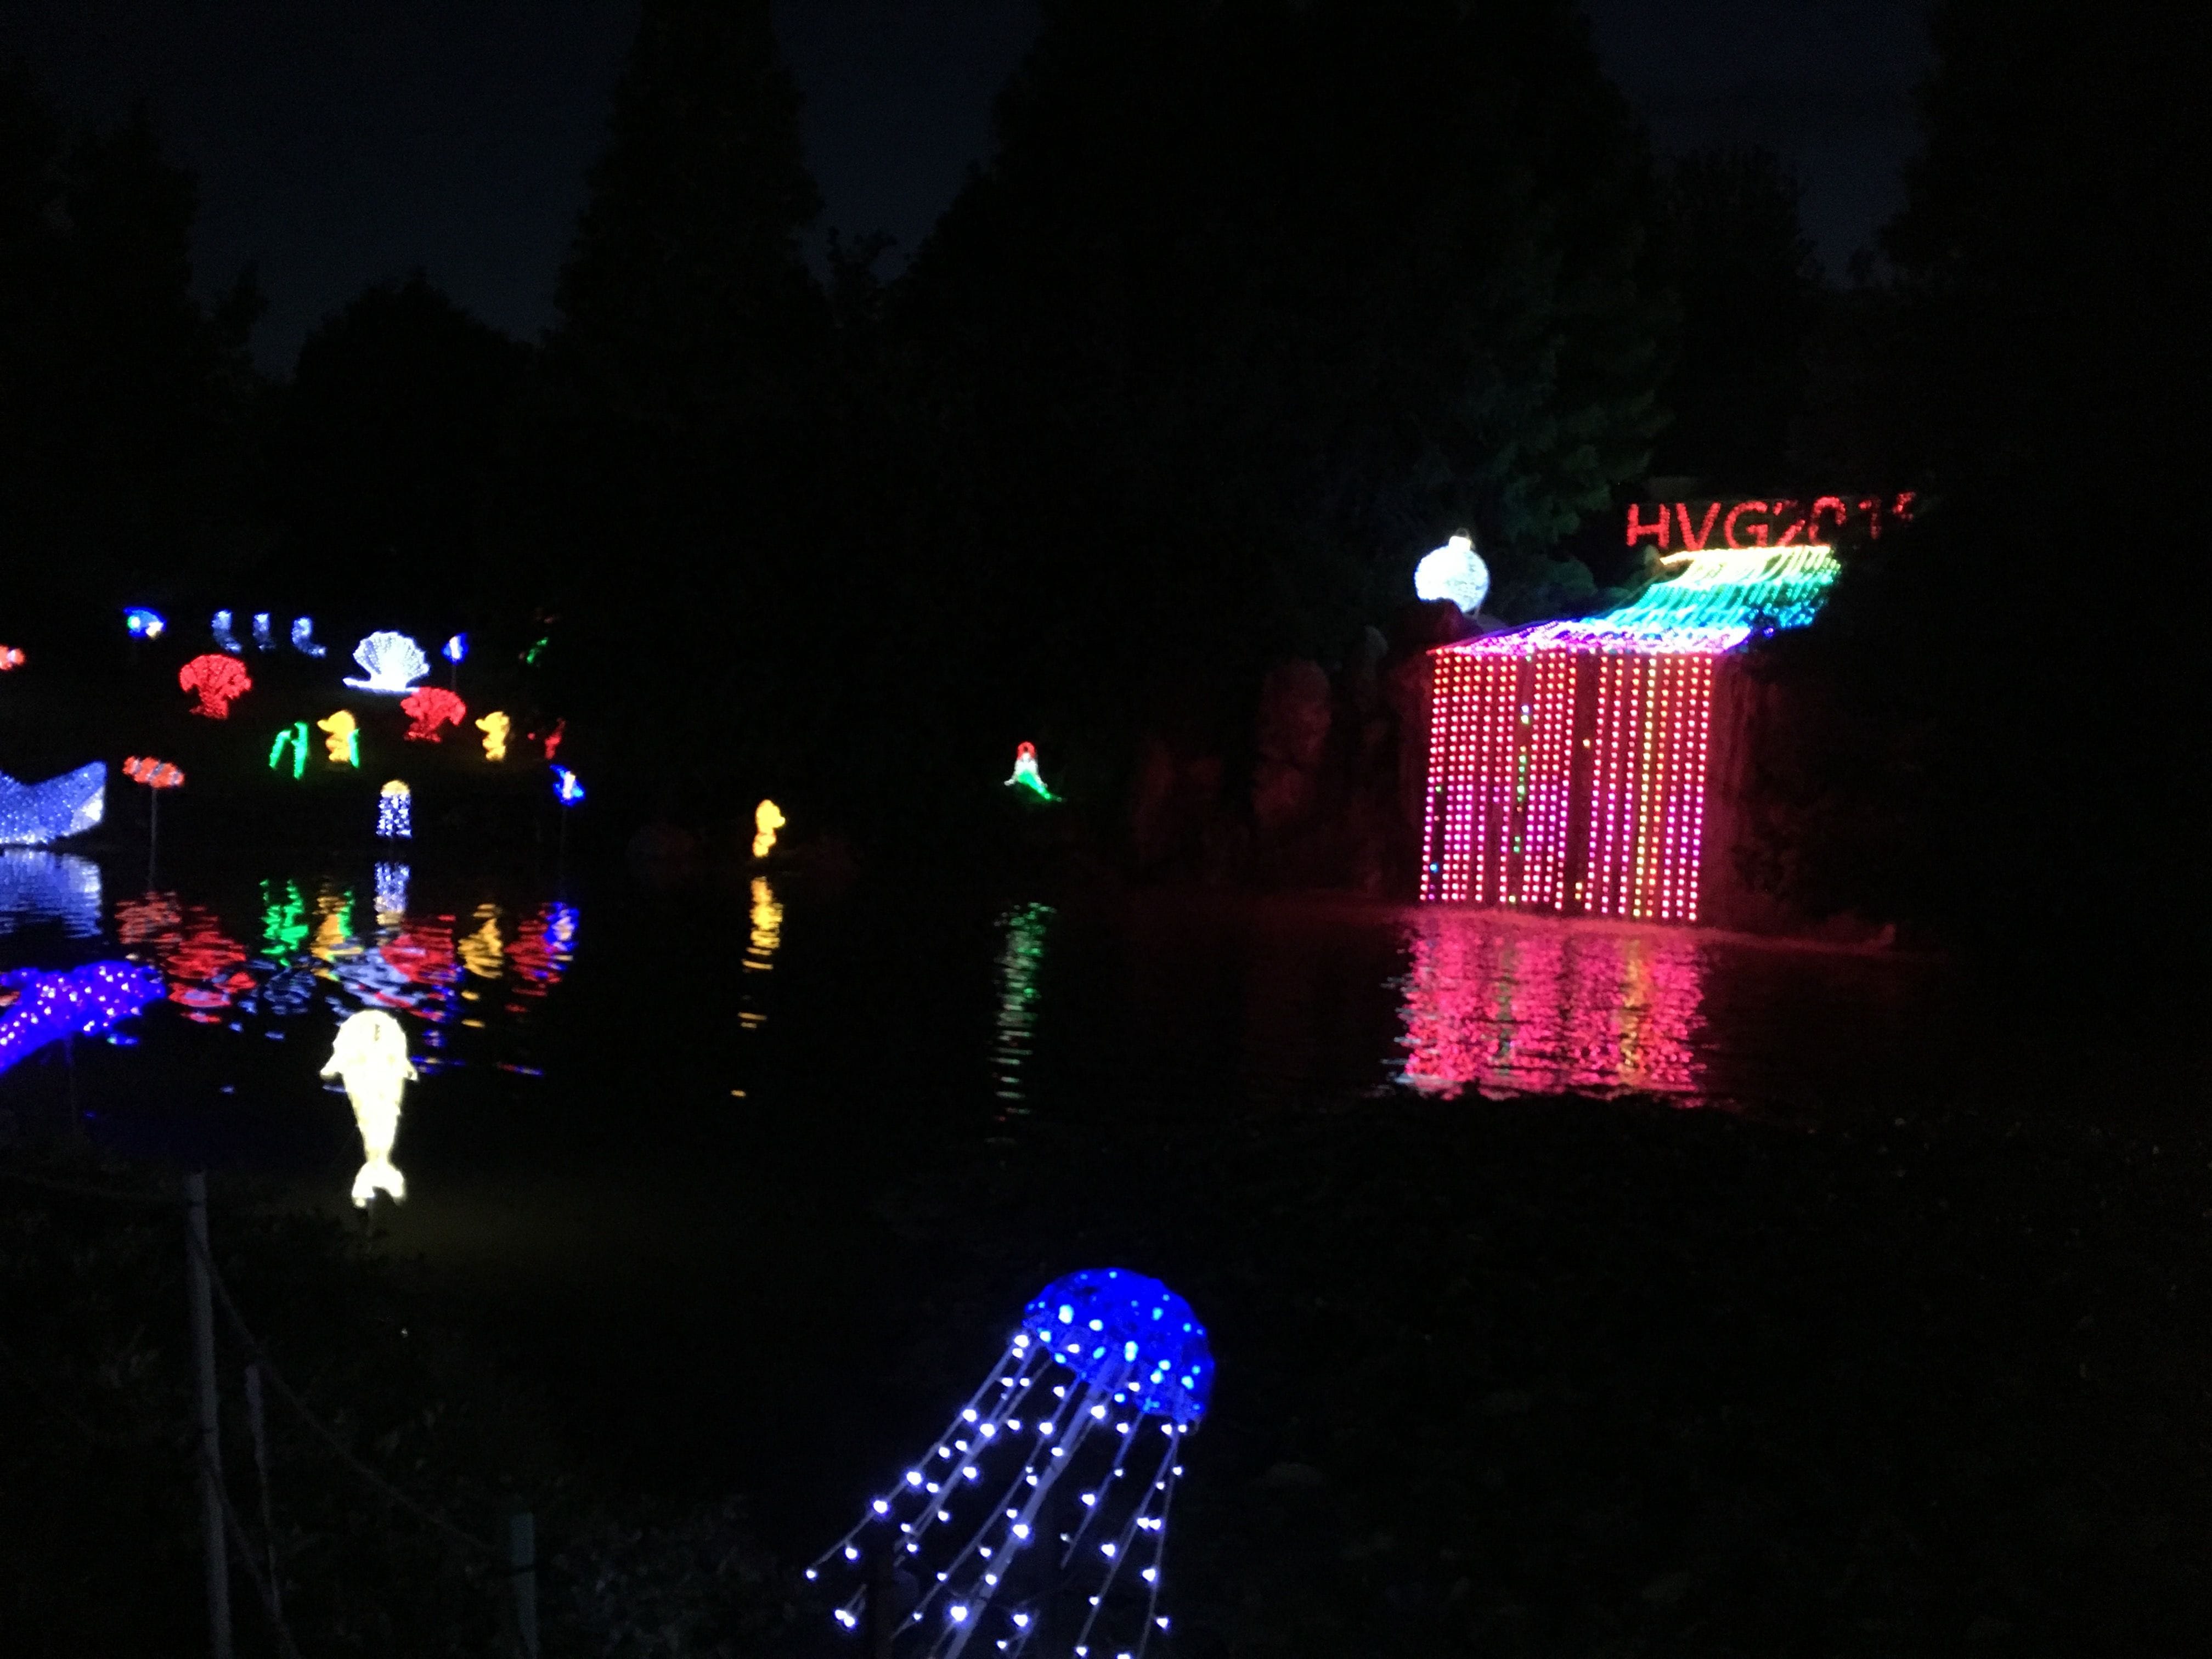 Hunter Valley Gardens Christmas Lights 2018-2019 Public Day Night Tour Image -5c149f62690f2